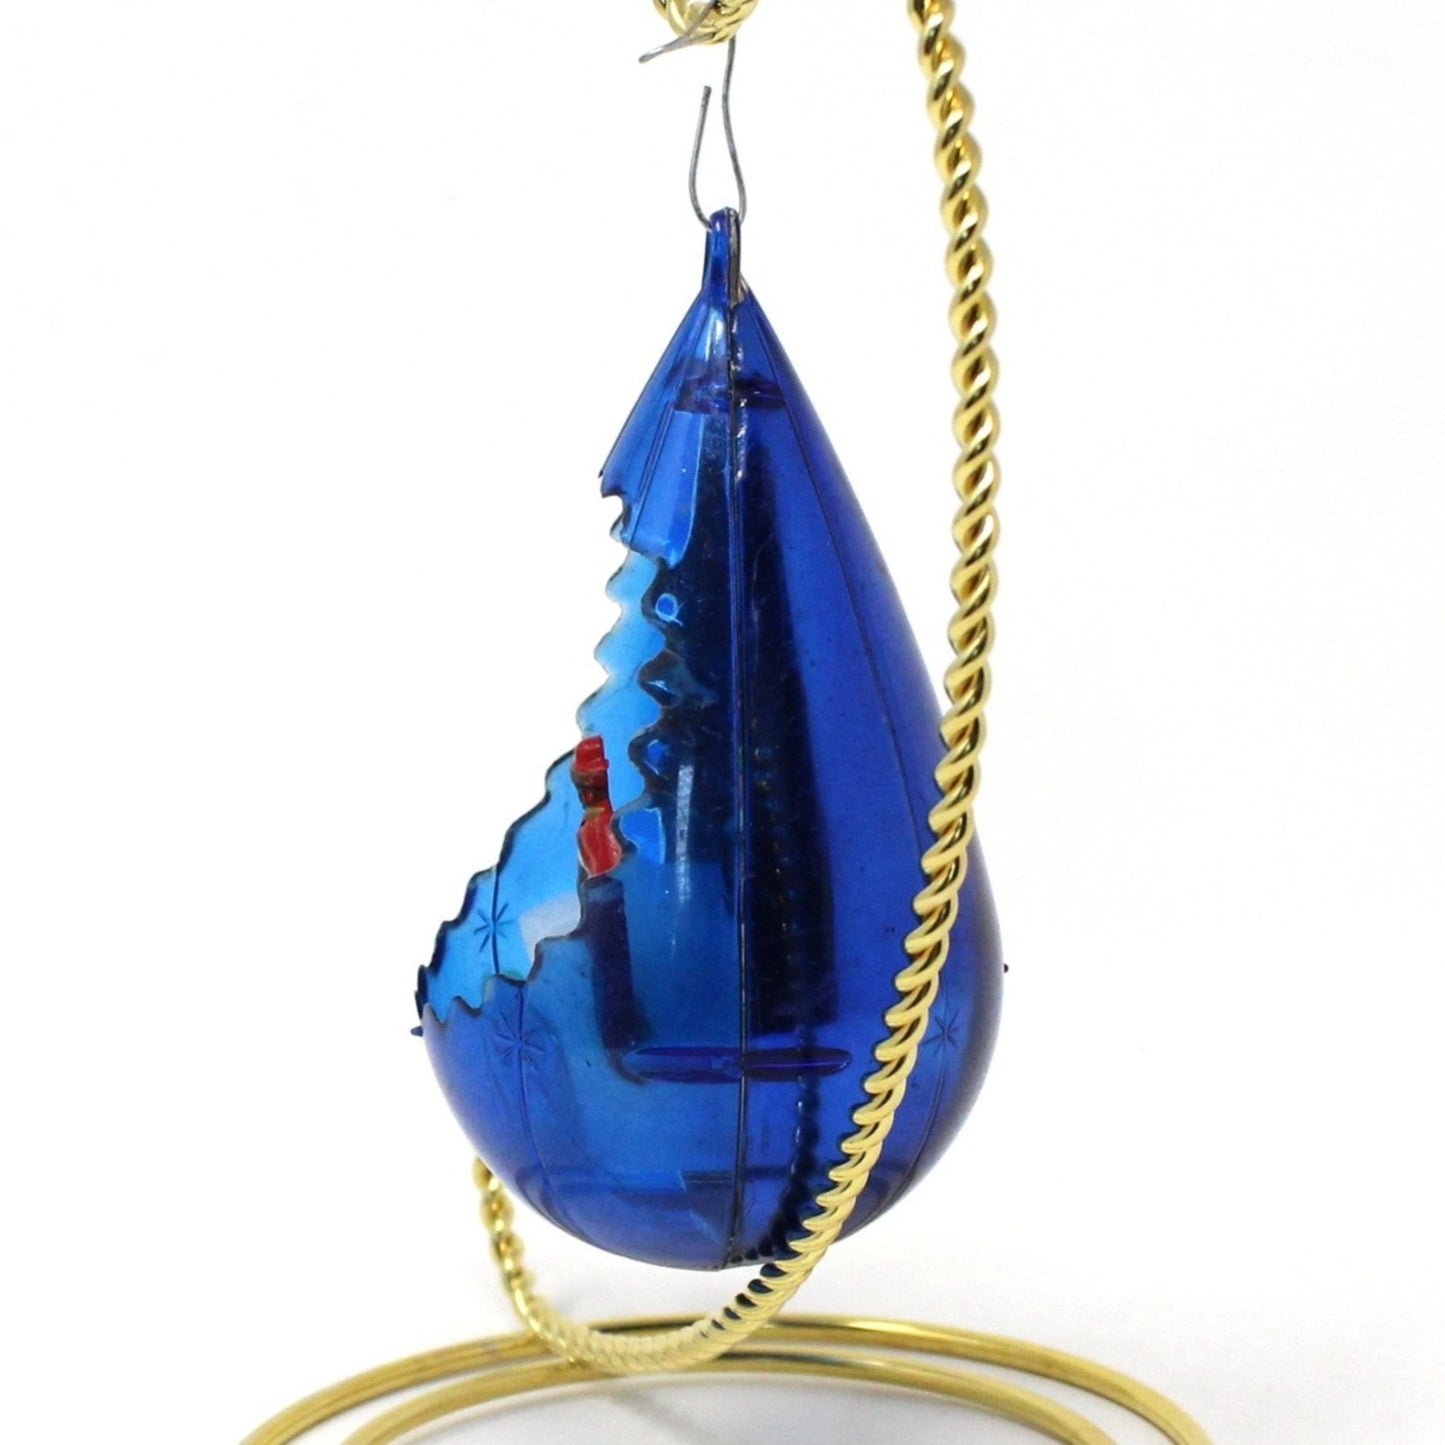 Ornament, Christmas Jewelbrite Diorama, Teardrop Blue with Wise Man & Camel, Vintage